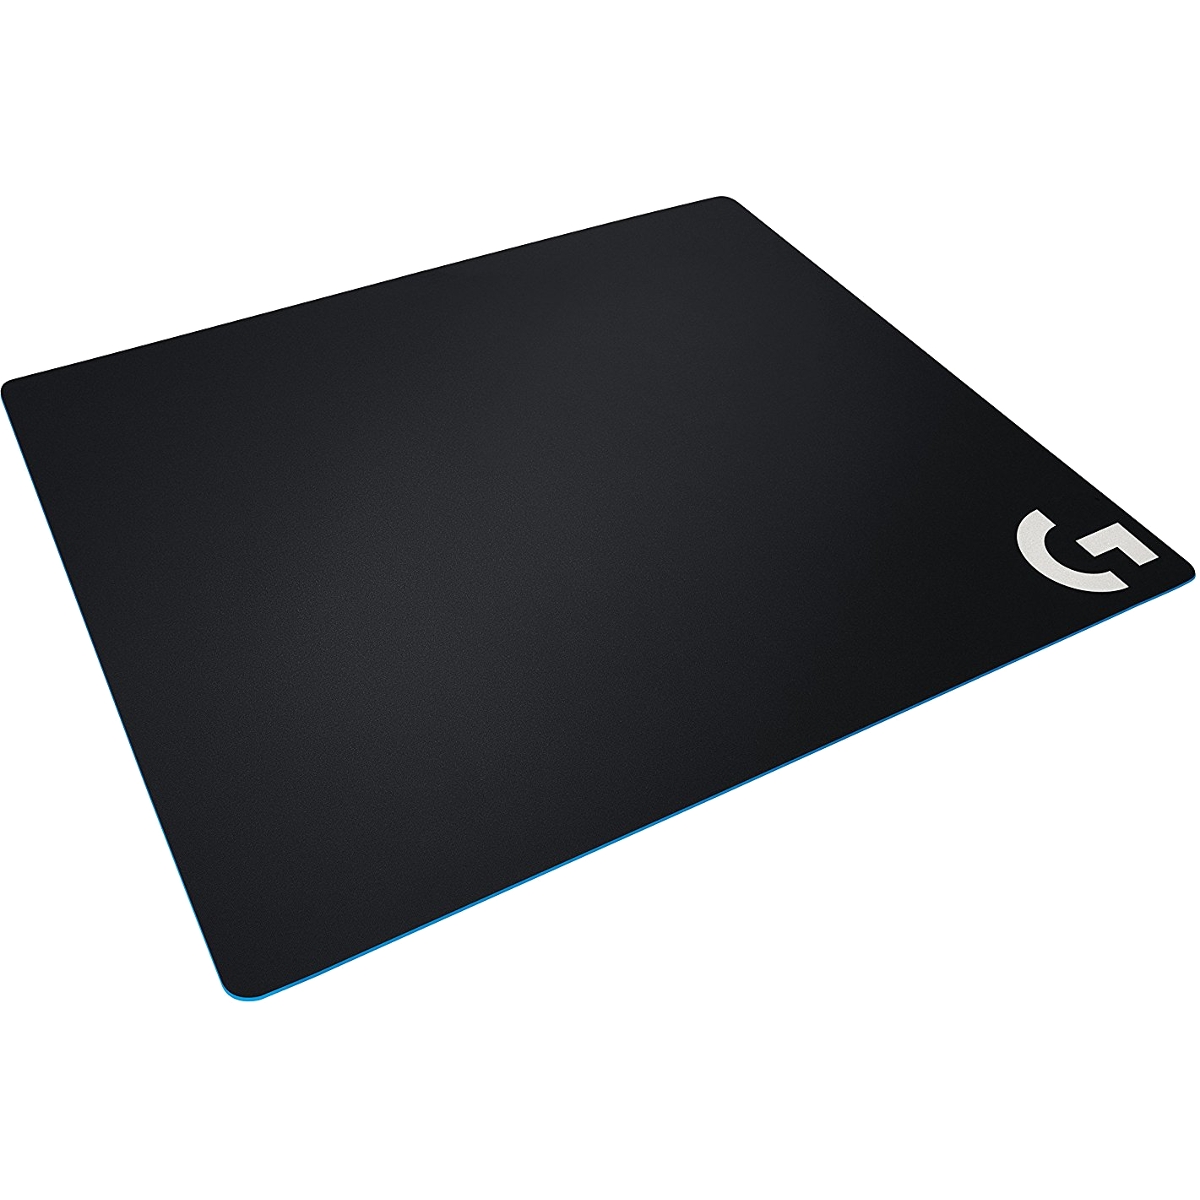 Logitech - Logitech G640 Large Cloth Gaming Mouse Pad